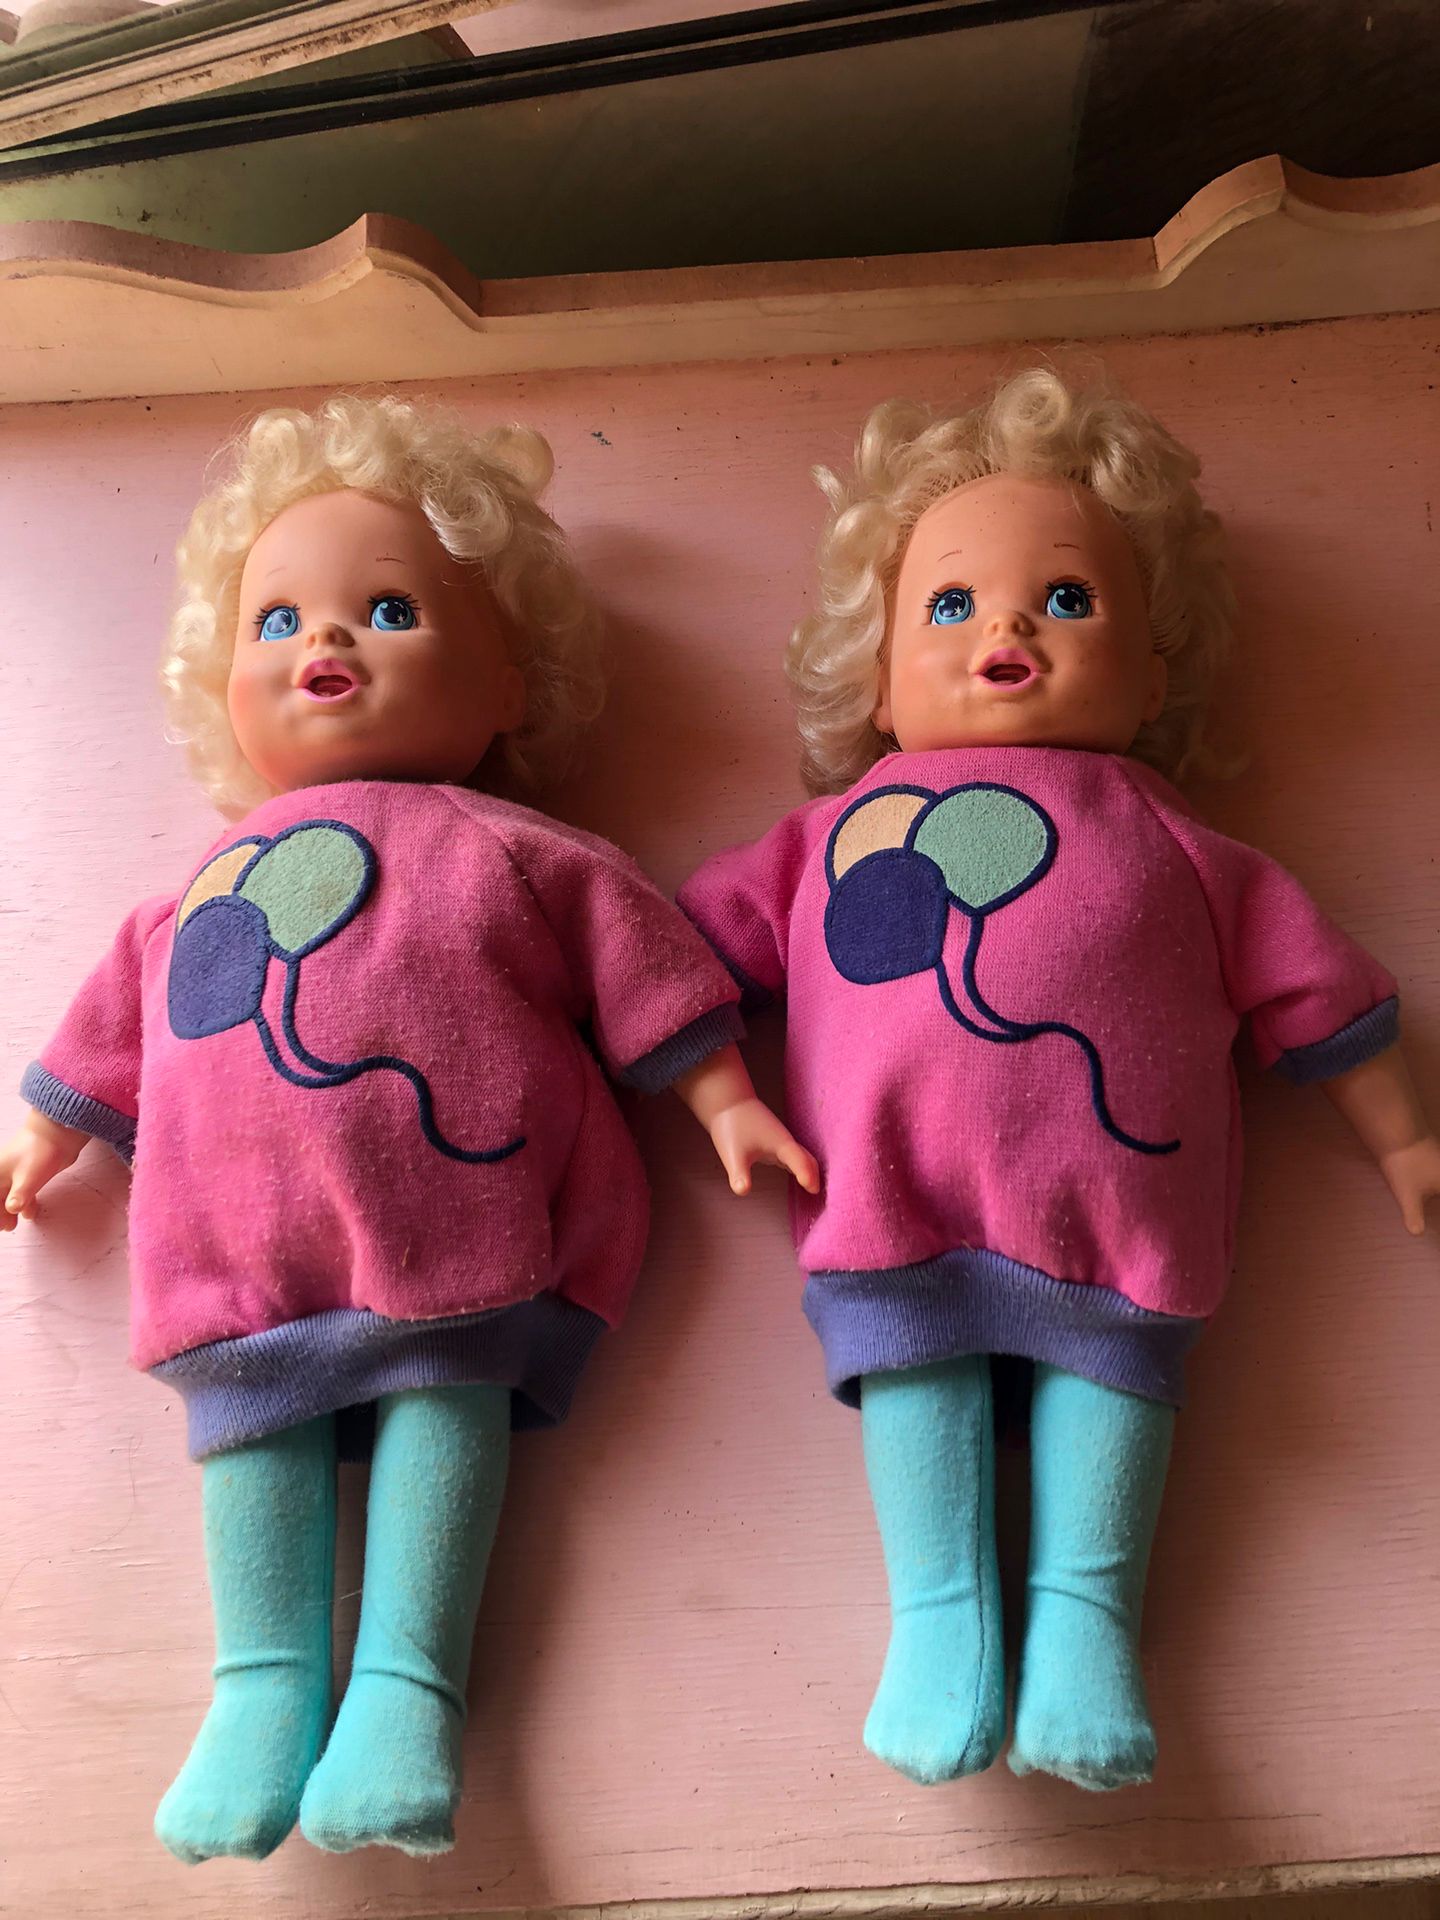 Vintage Baby Grow Up Dolls